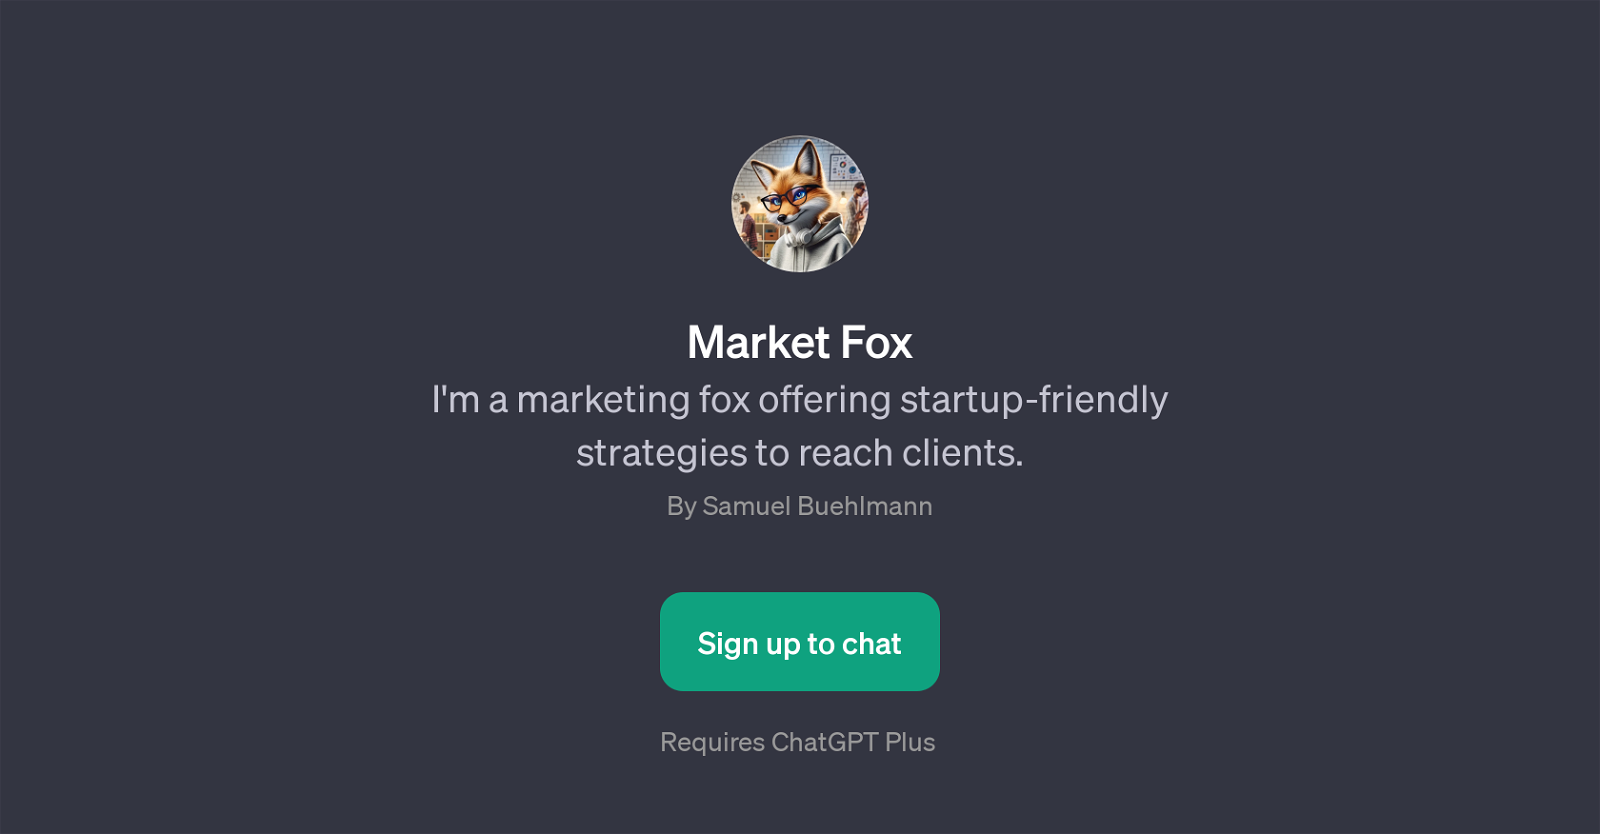 Market Fox website